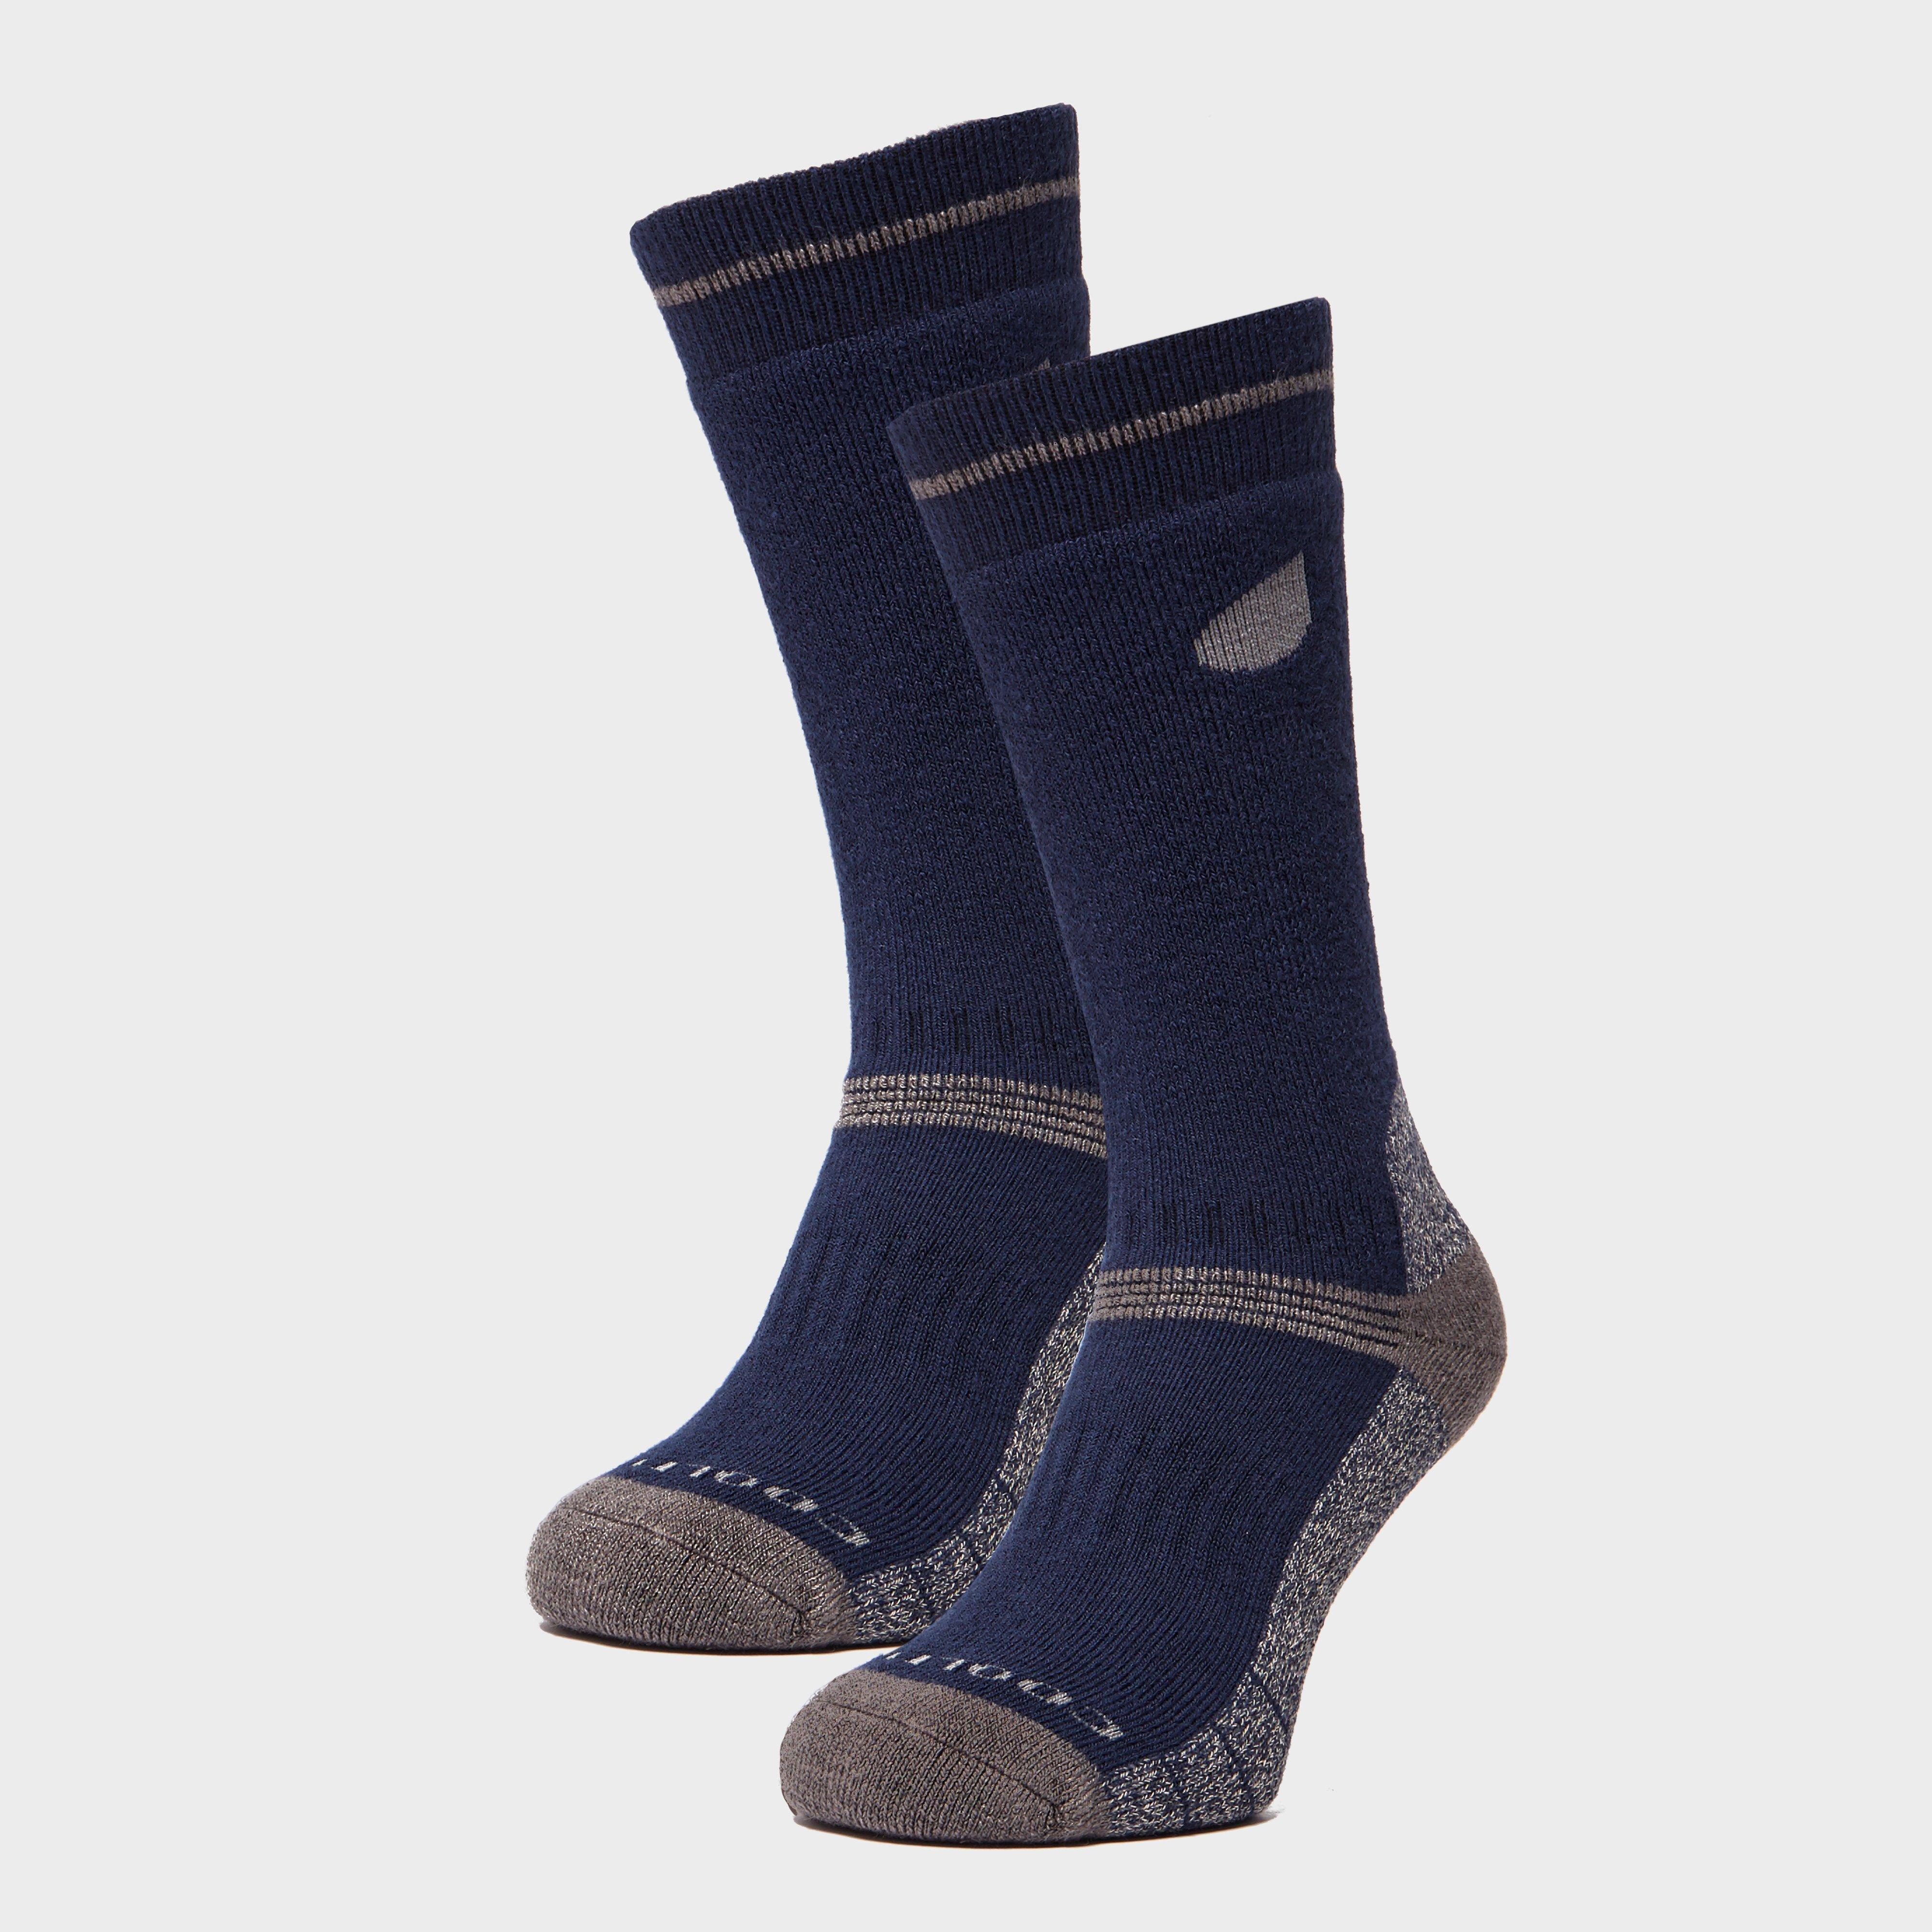 Peter Storm Mens Midweight Outdoor Socks - 2 Pair Pack - Navy/navy  Navy/navy